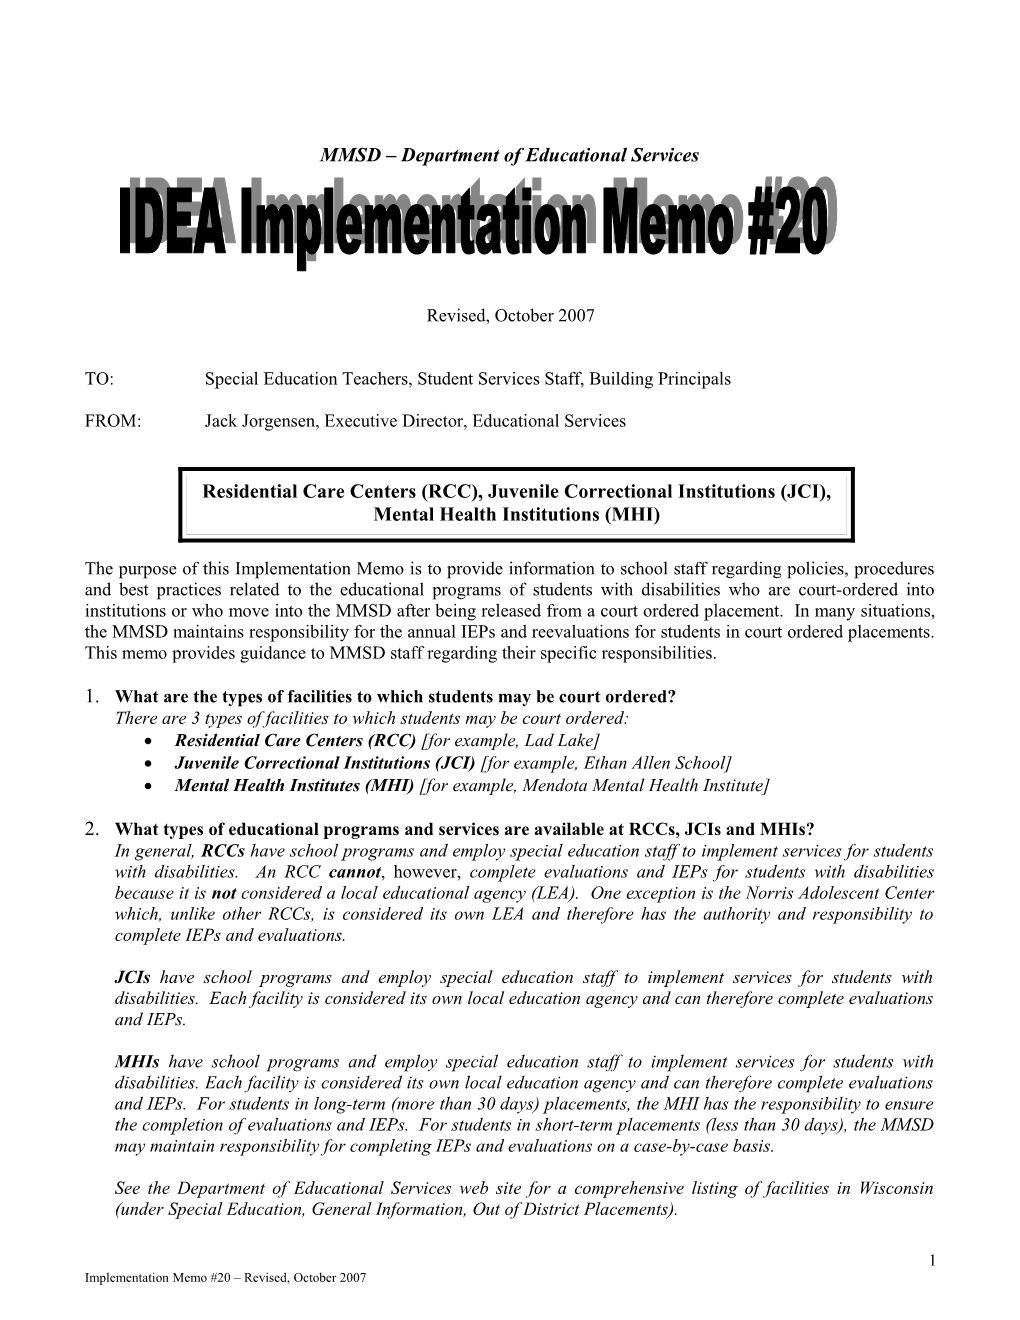 Implementation Memo #20 - Revised, September 2007